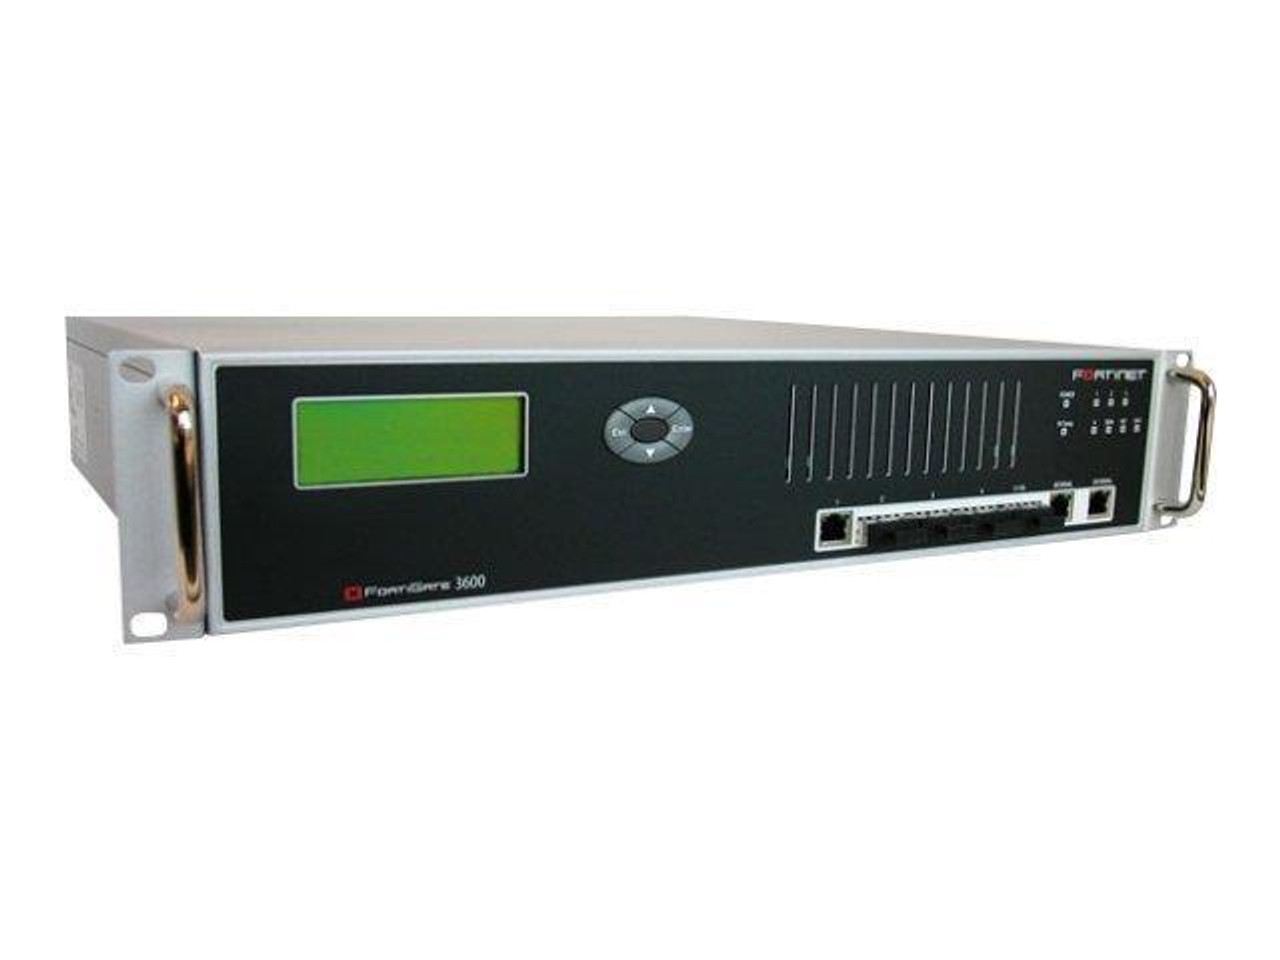 Fortinet FortiGate 3600 Unified Threat Management Appliance - 7 Port - 10/100/1000Base-T 10/100Base-TX 1000Base-SX - Gigabit